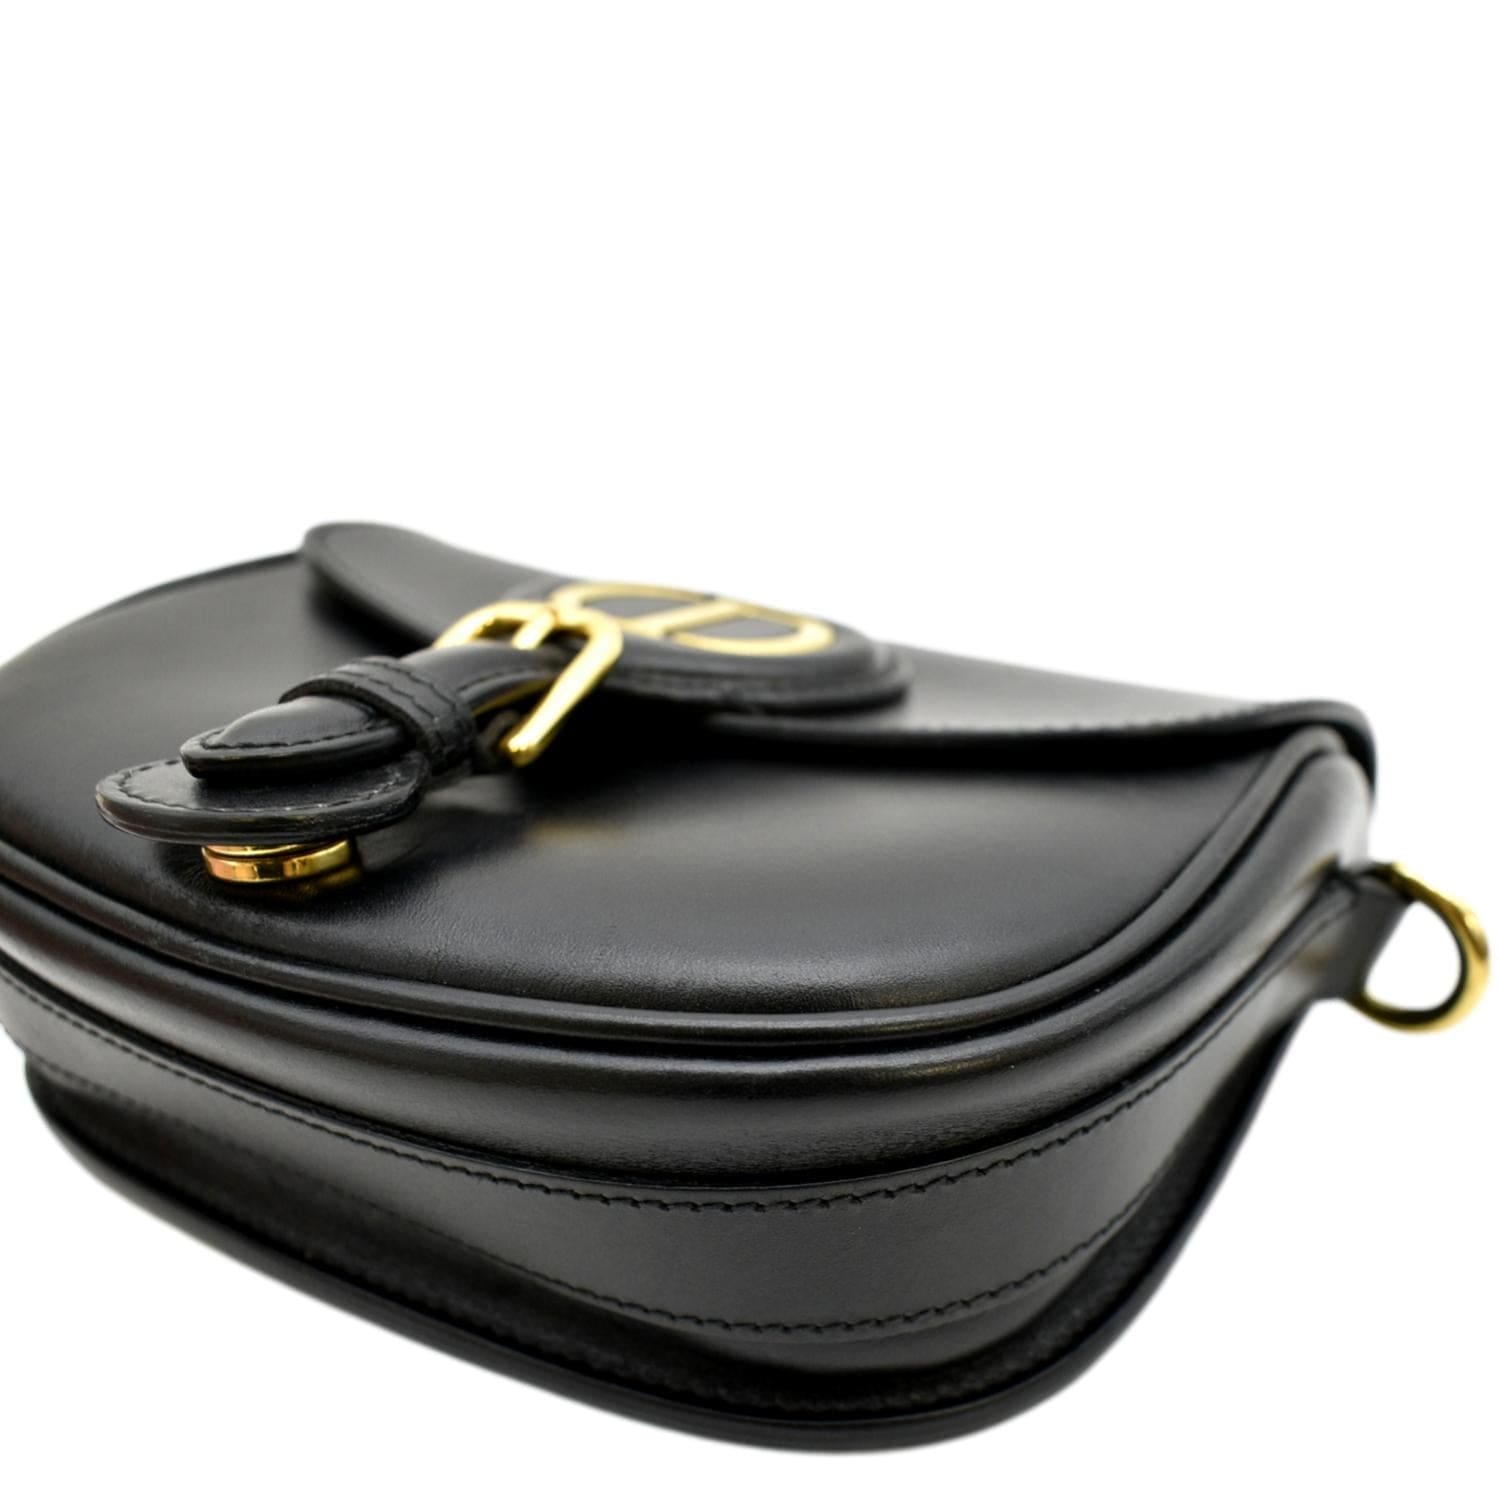 Dior Bobby Leather Crossbody Bag Black